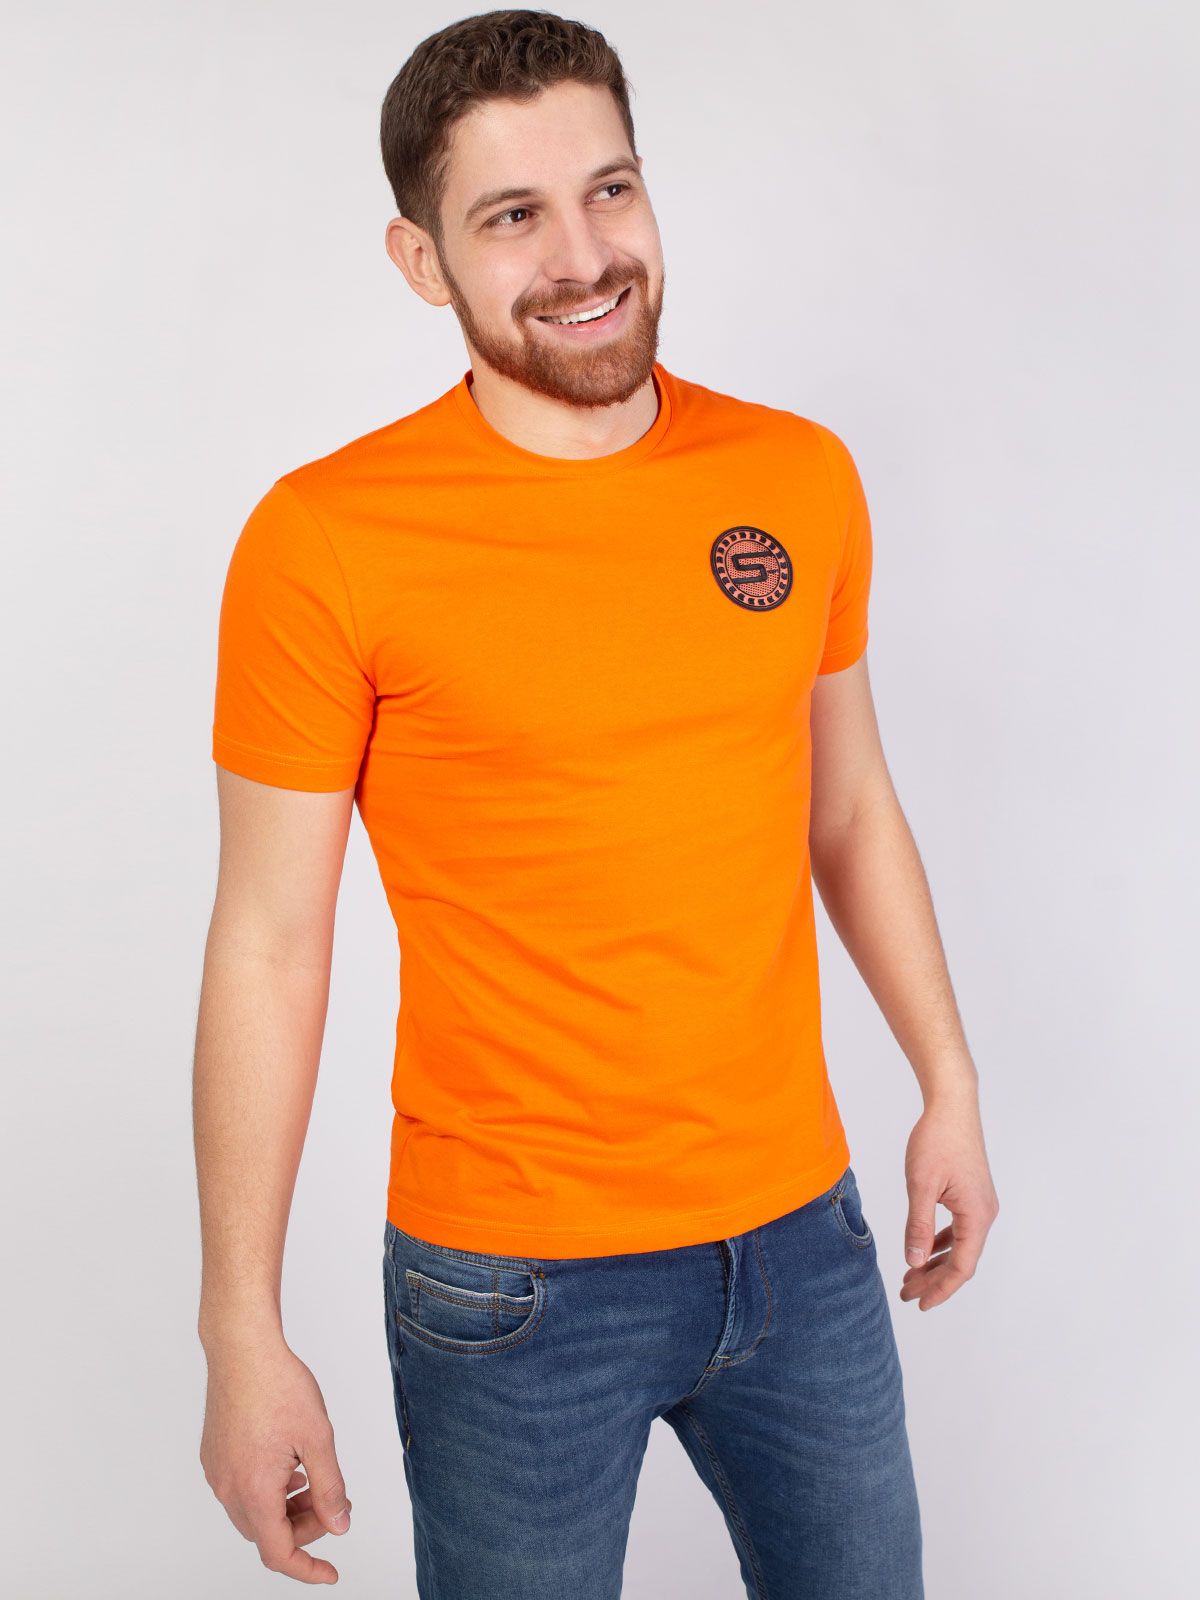 Set of tshirts in orange - 13021 - € 50.06 img3